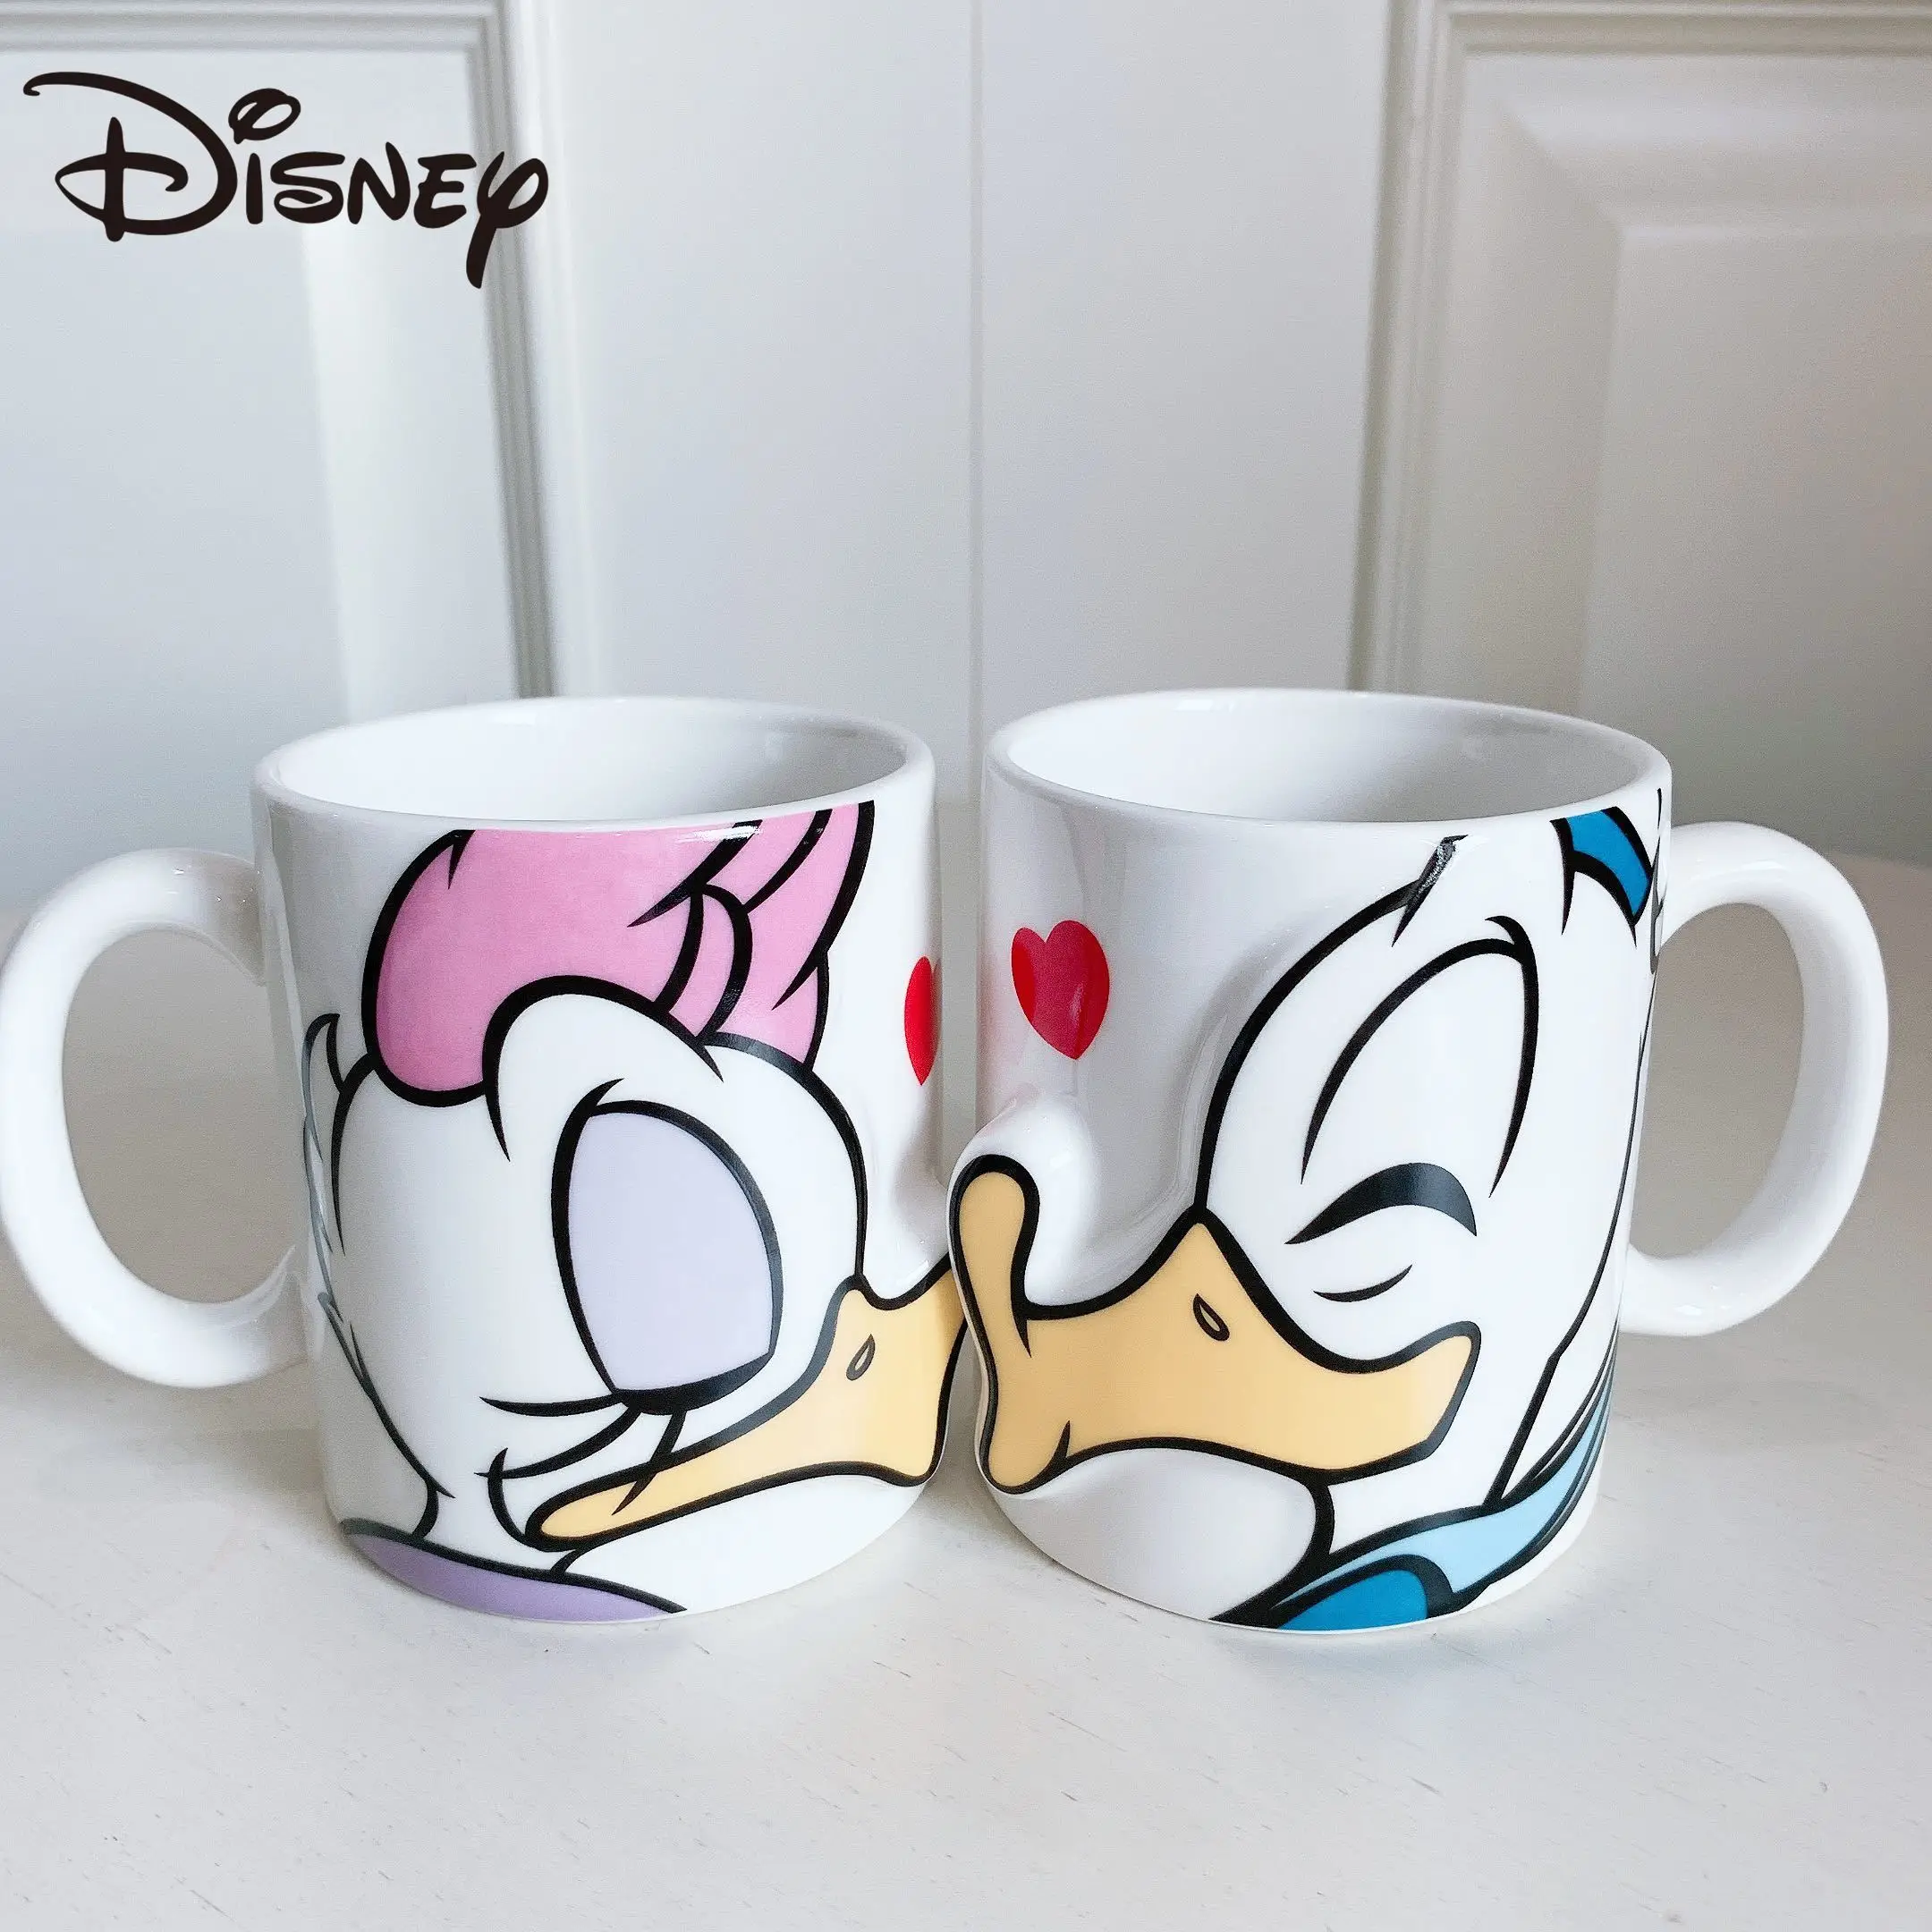 Disney Mugs Donald Duck Series Ceramic Mugs Couple Mugs Large Capacity Milk Mugs Coffee Mugs coffee mug  mugs